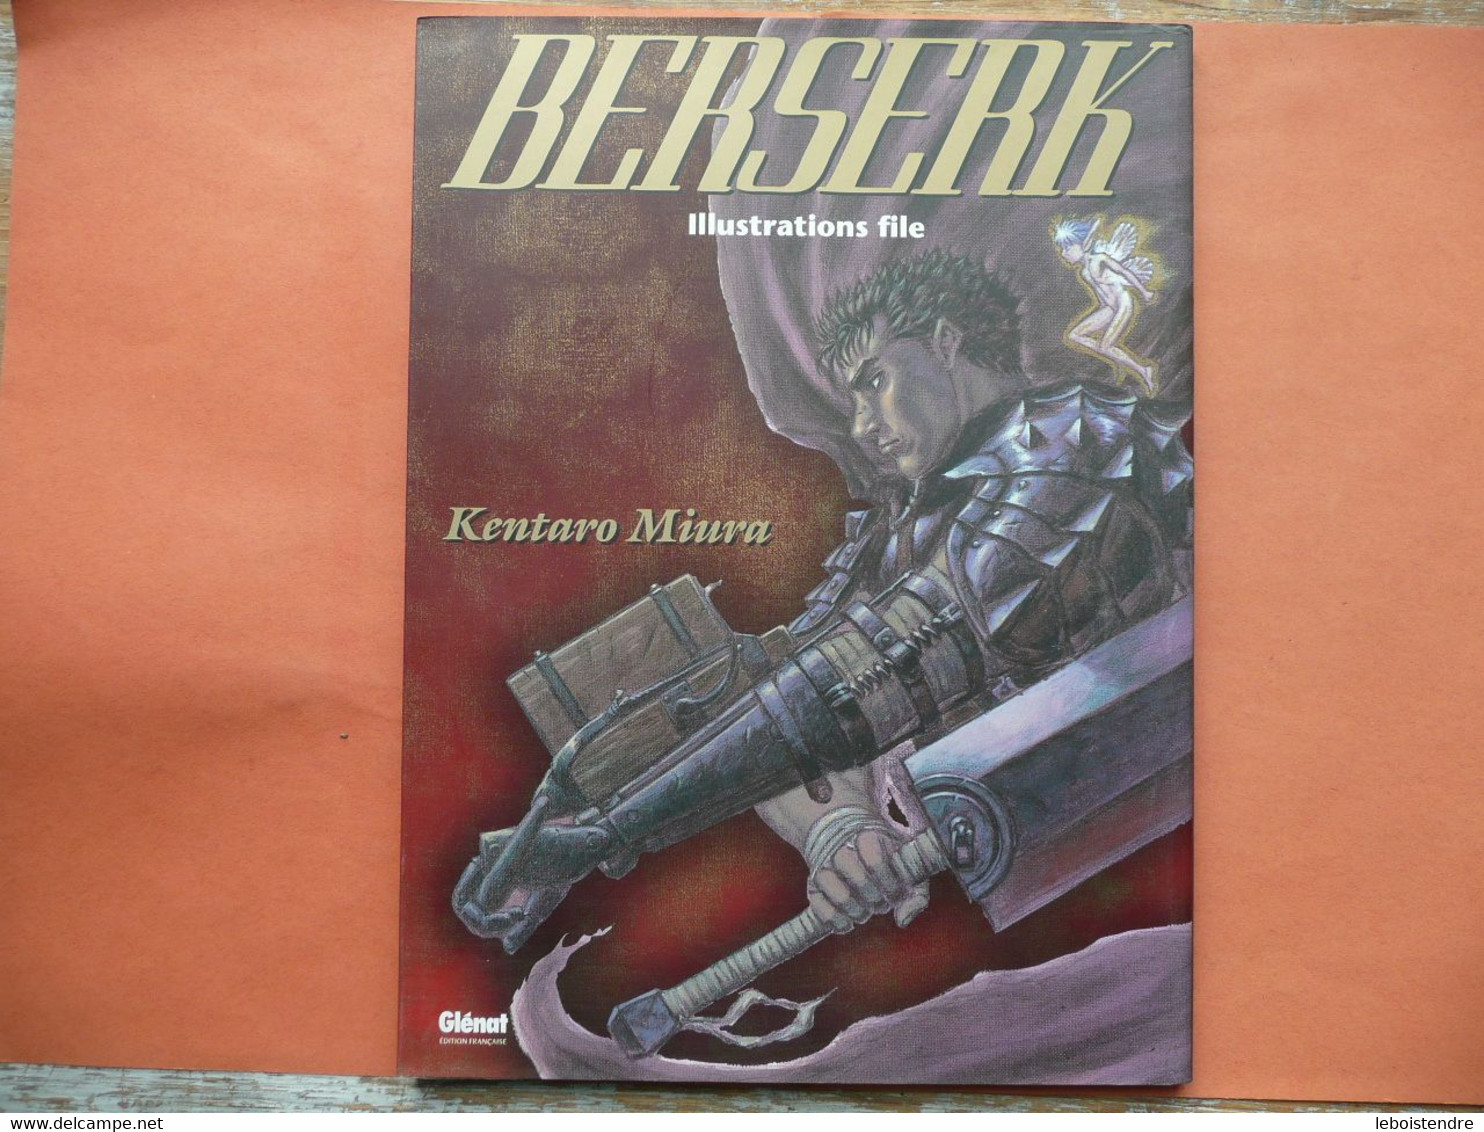 BERSERK ILLUSTRATIONS FILE KENTARO MIURA 2009 GLENAT LIVRE SUR CETTE SERIE MEDIEVALE FANTASTIQUE EN MANGA - Dossiers De Presse